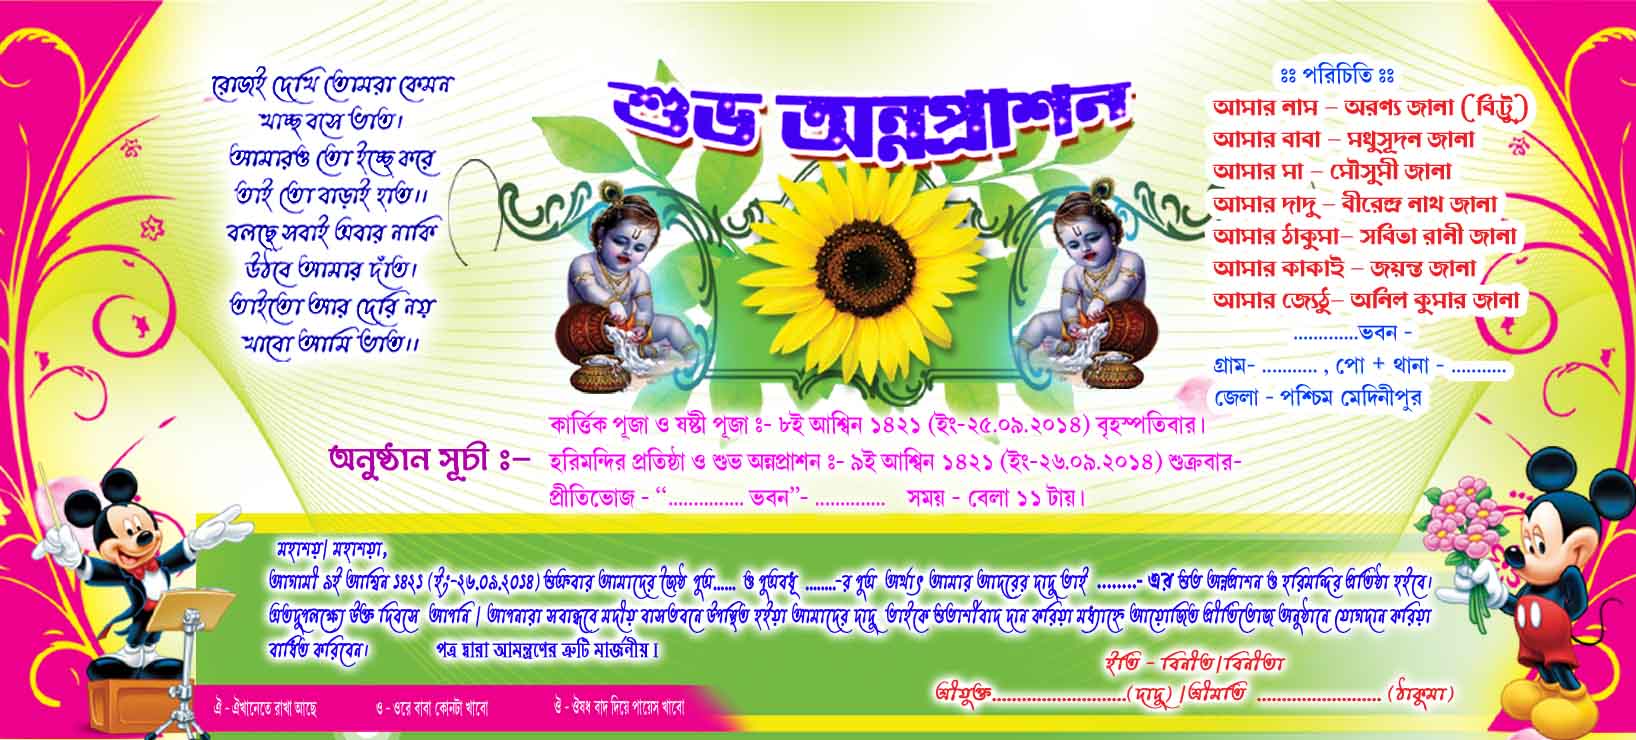 annaprashan card format in bengali psd